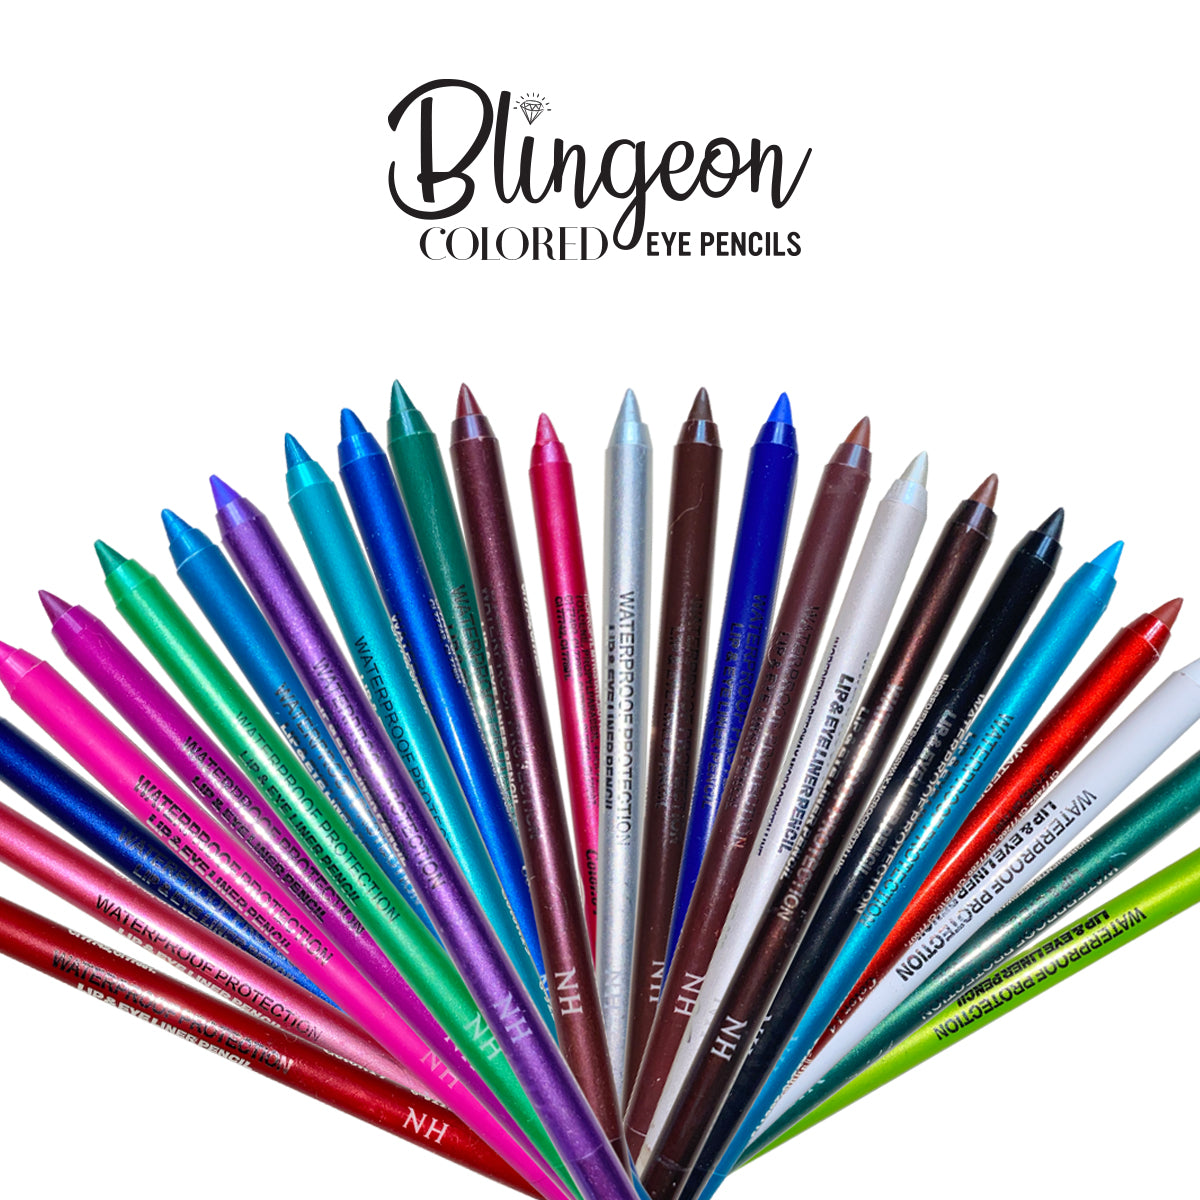 Blingeon Colored Eye Pencils